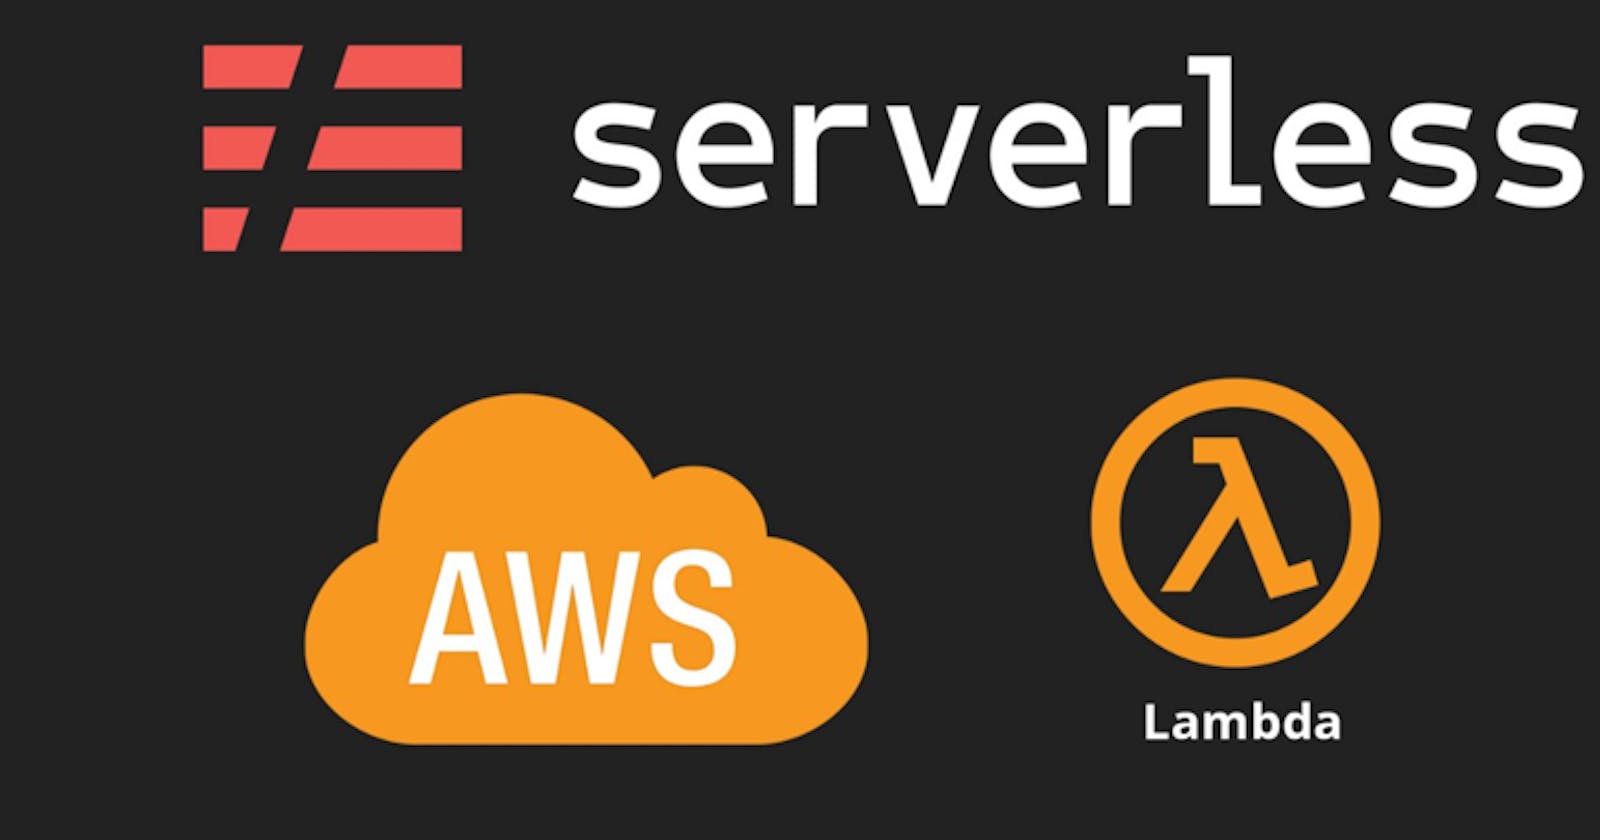 ServerlessArchitecture#02 Serverless vs Microservices Architecture